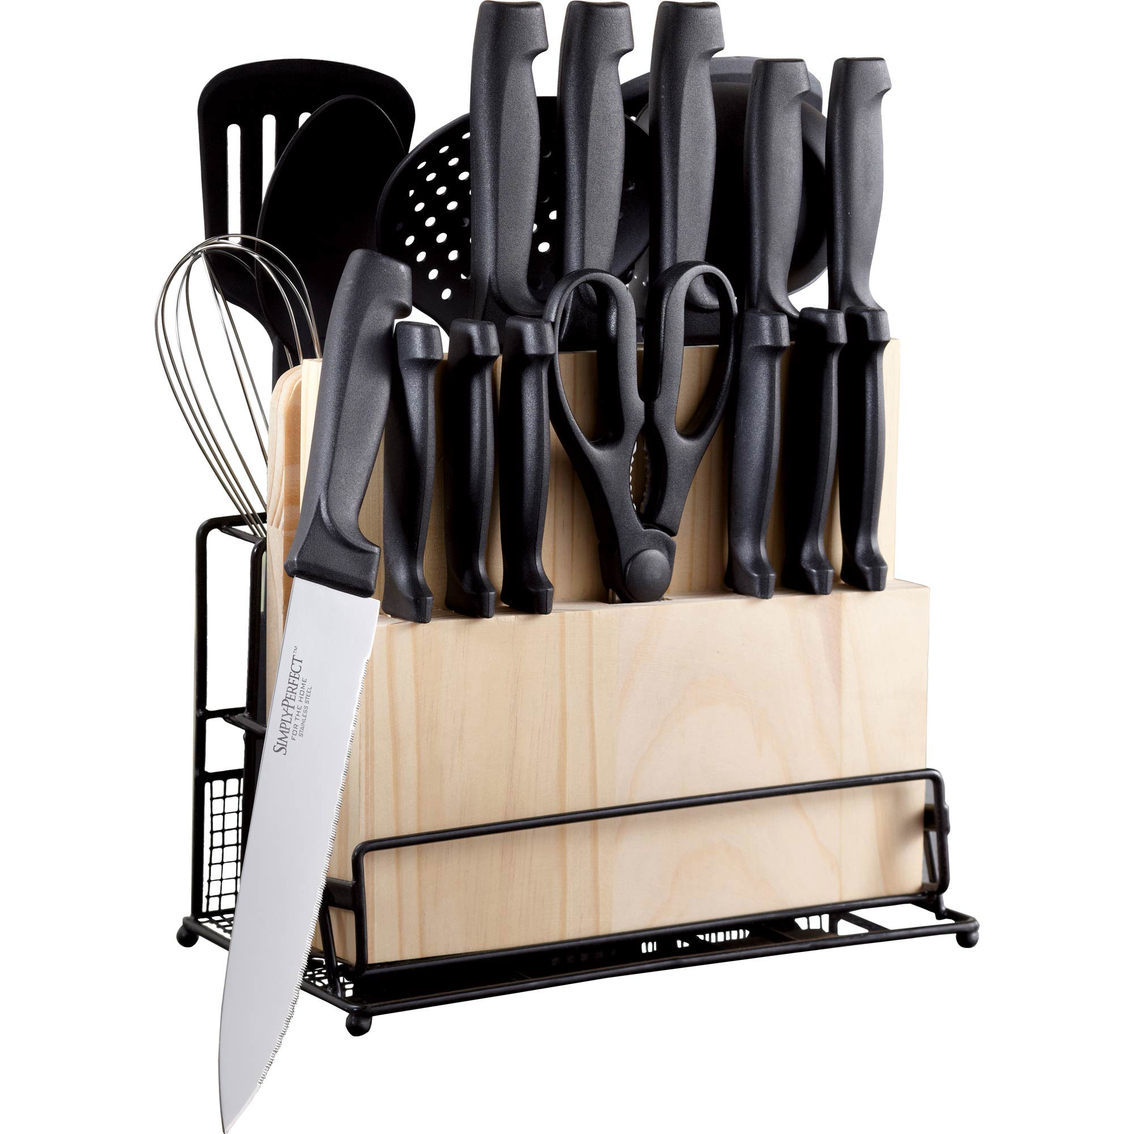 HouseHold Cutlery Set